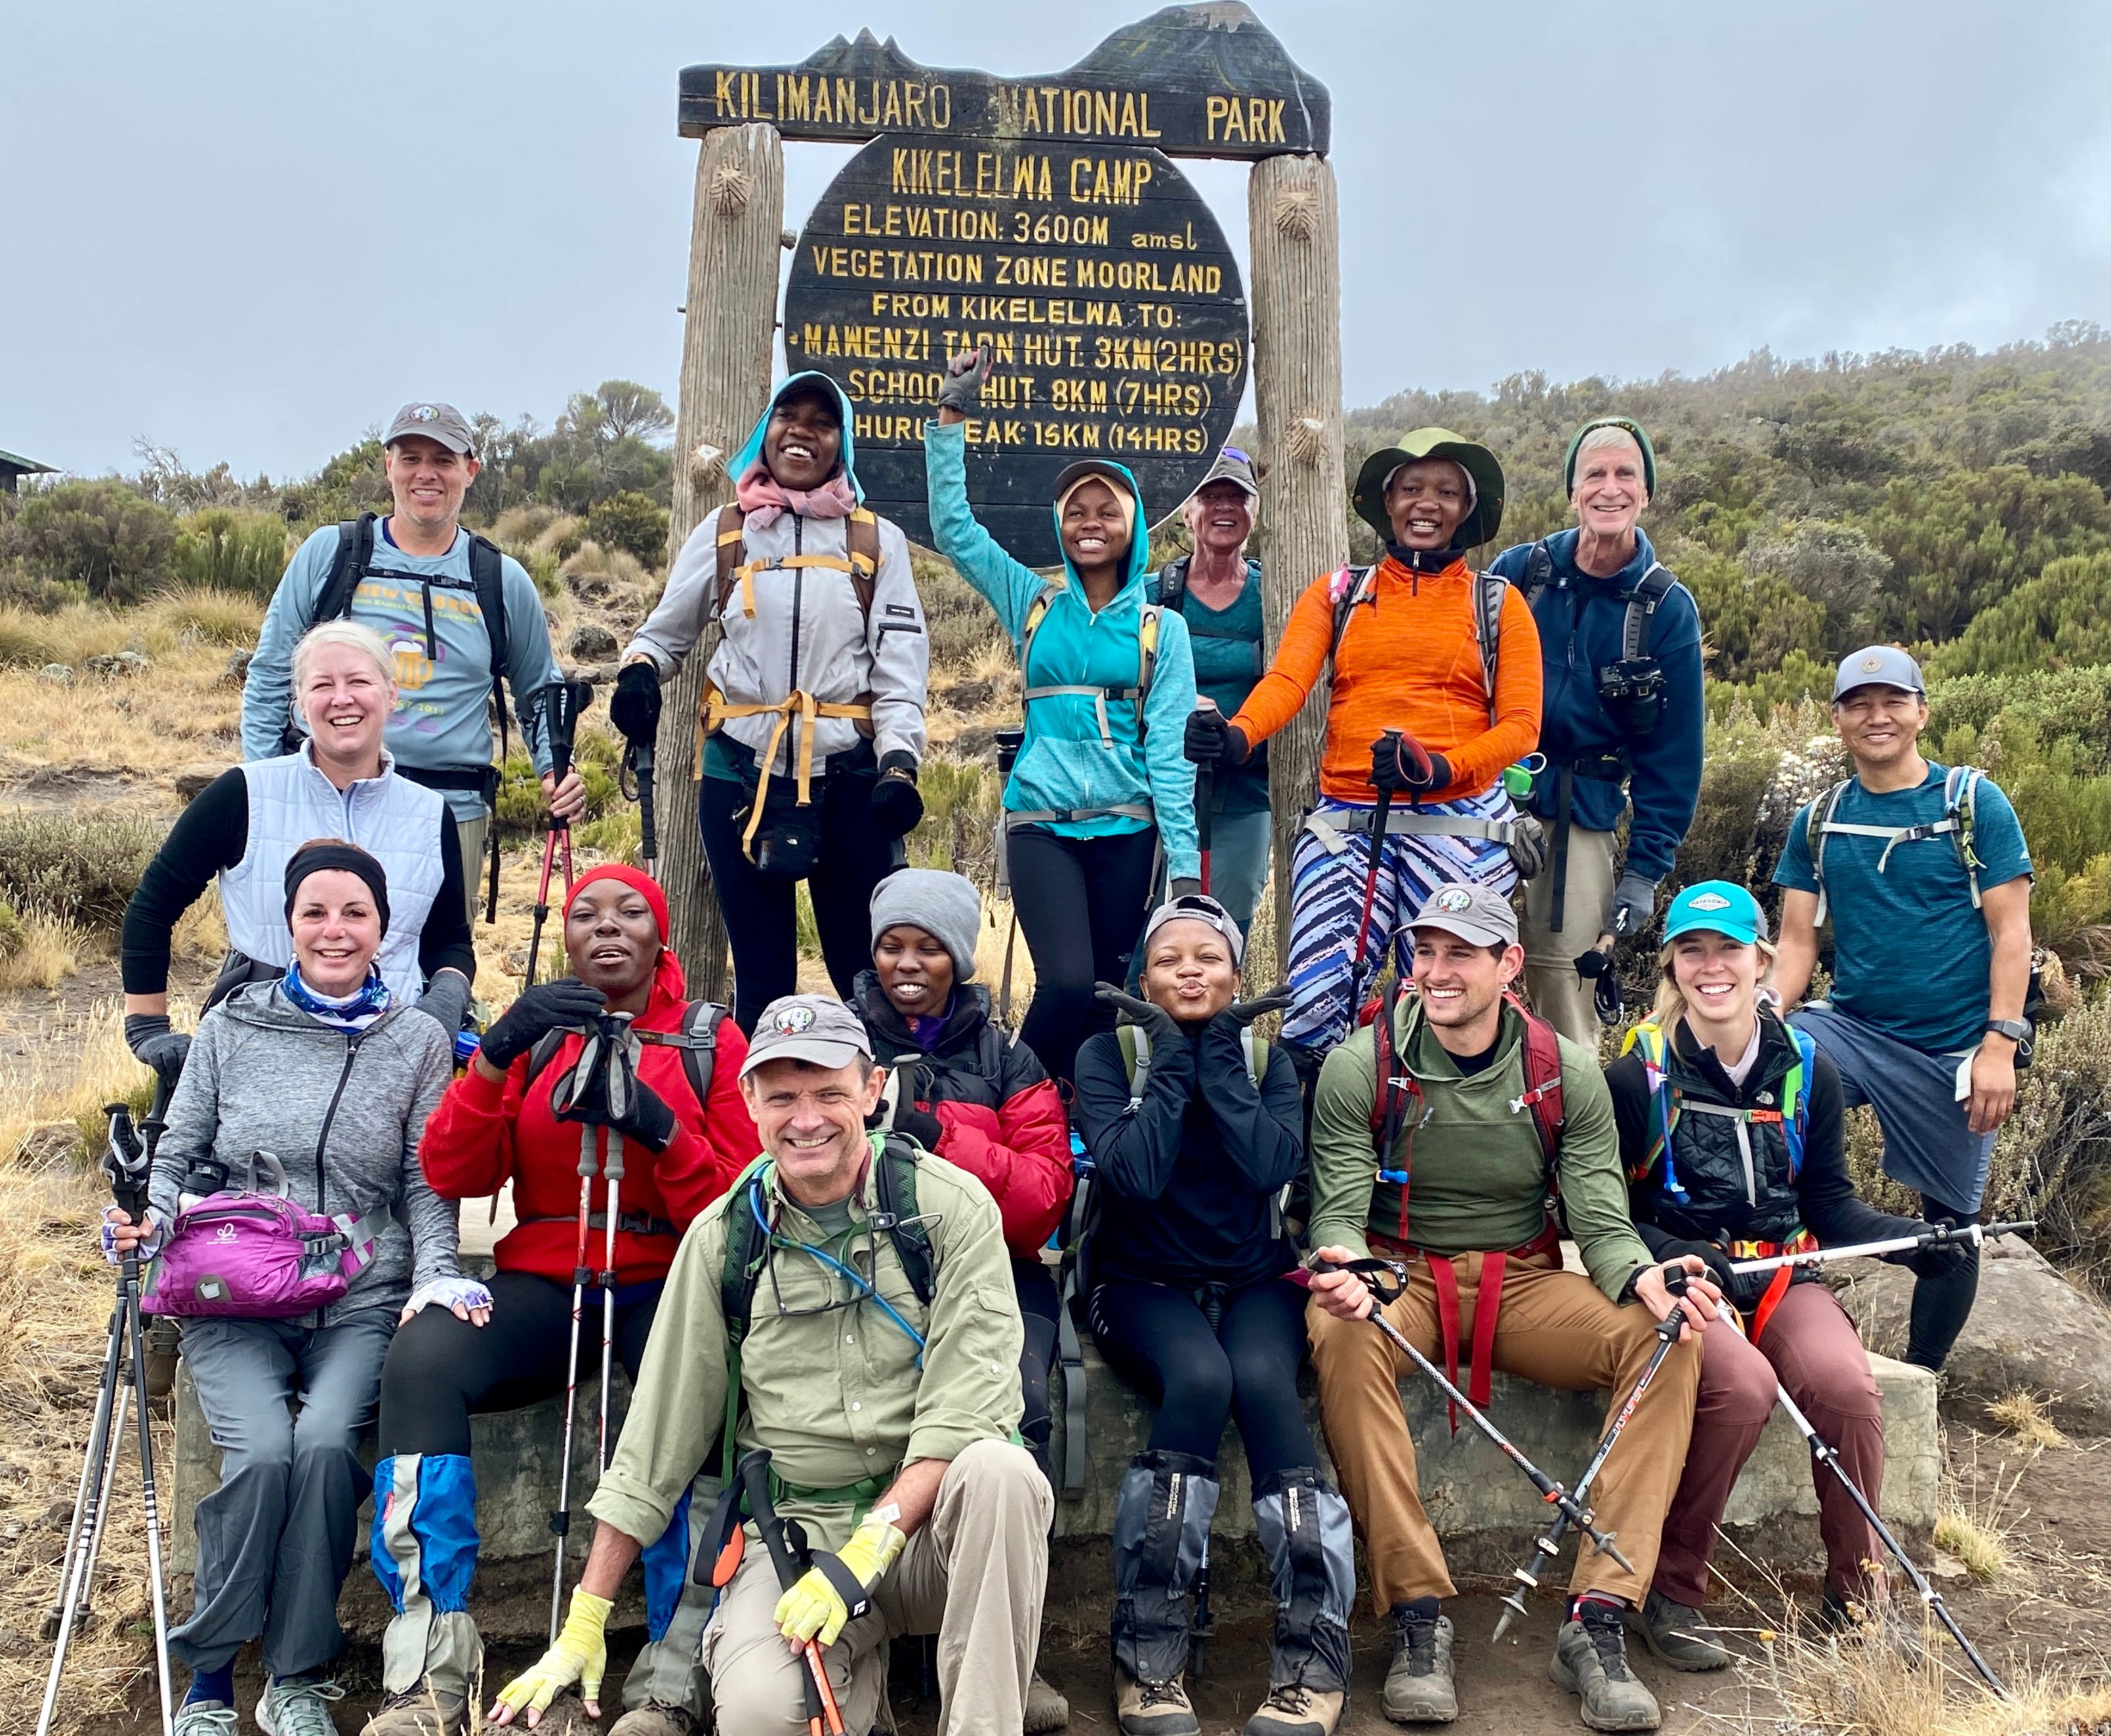 Kilimanjaro Trip